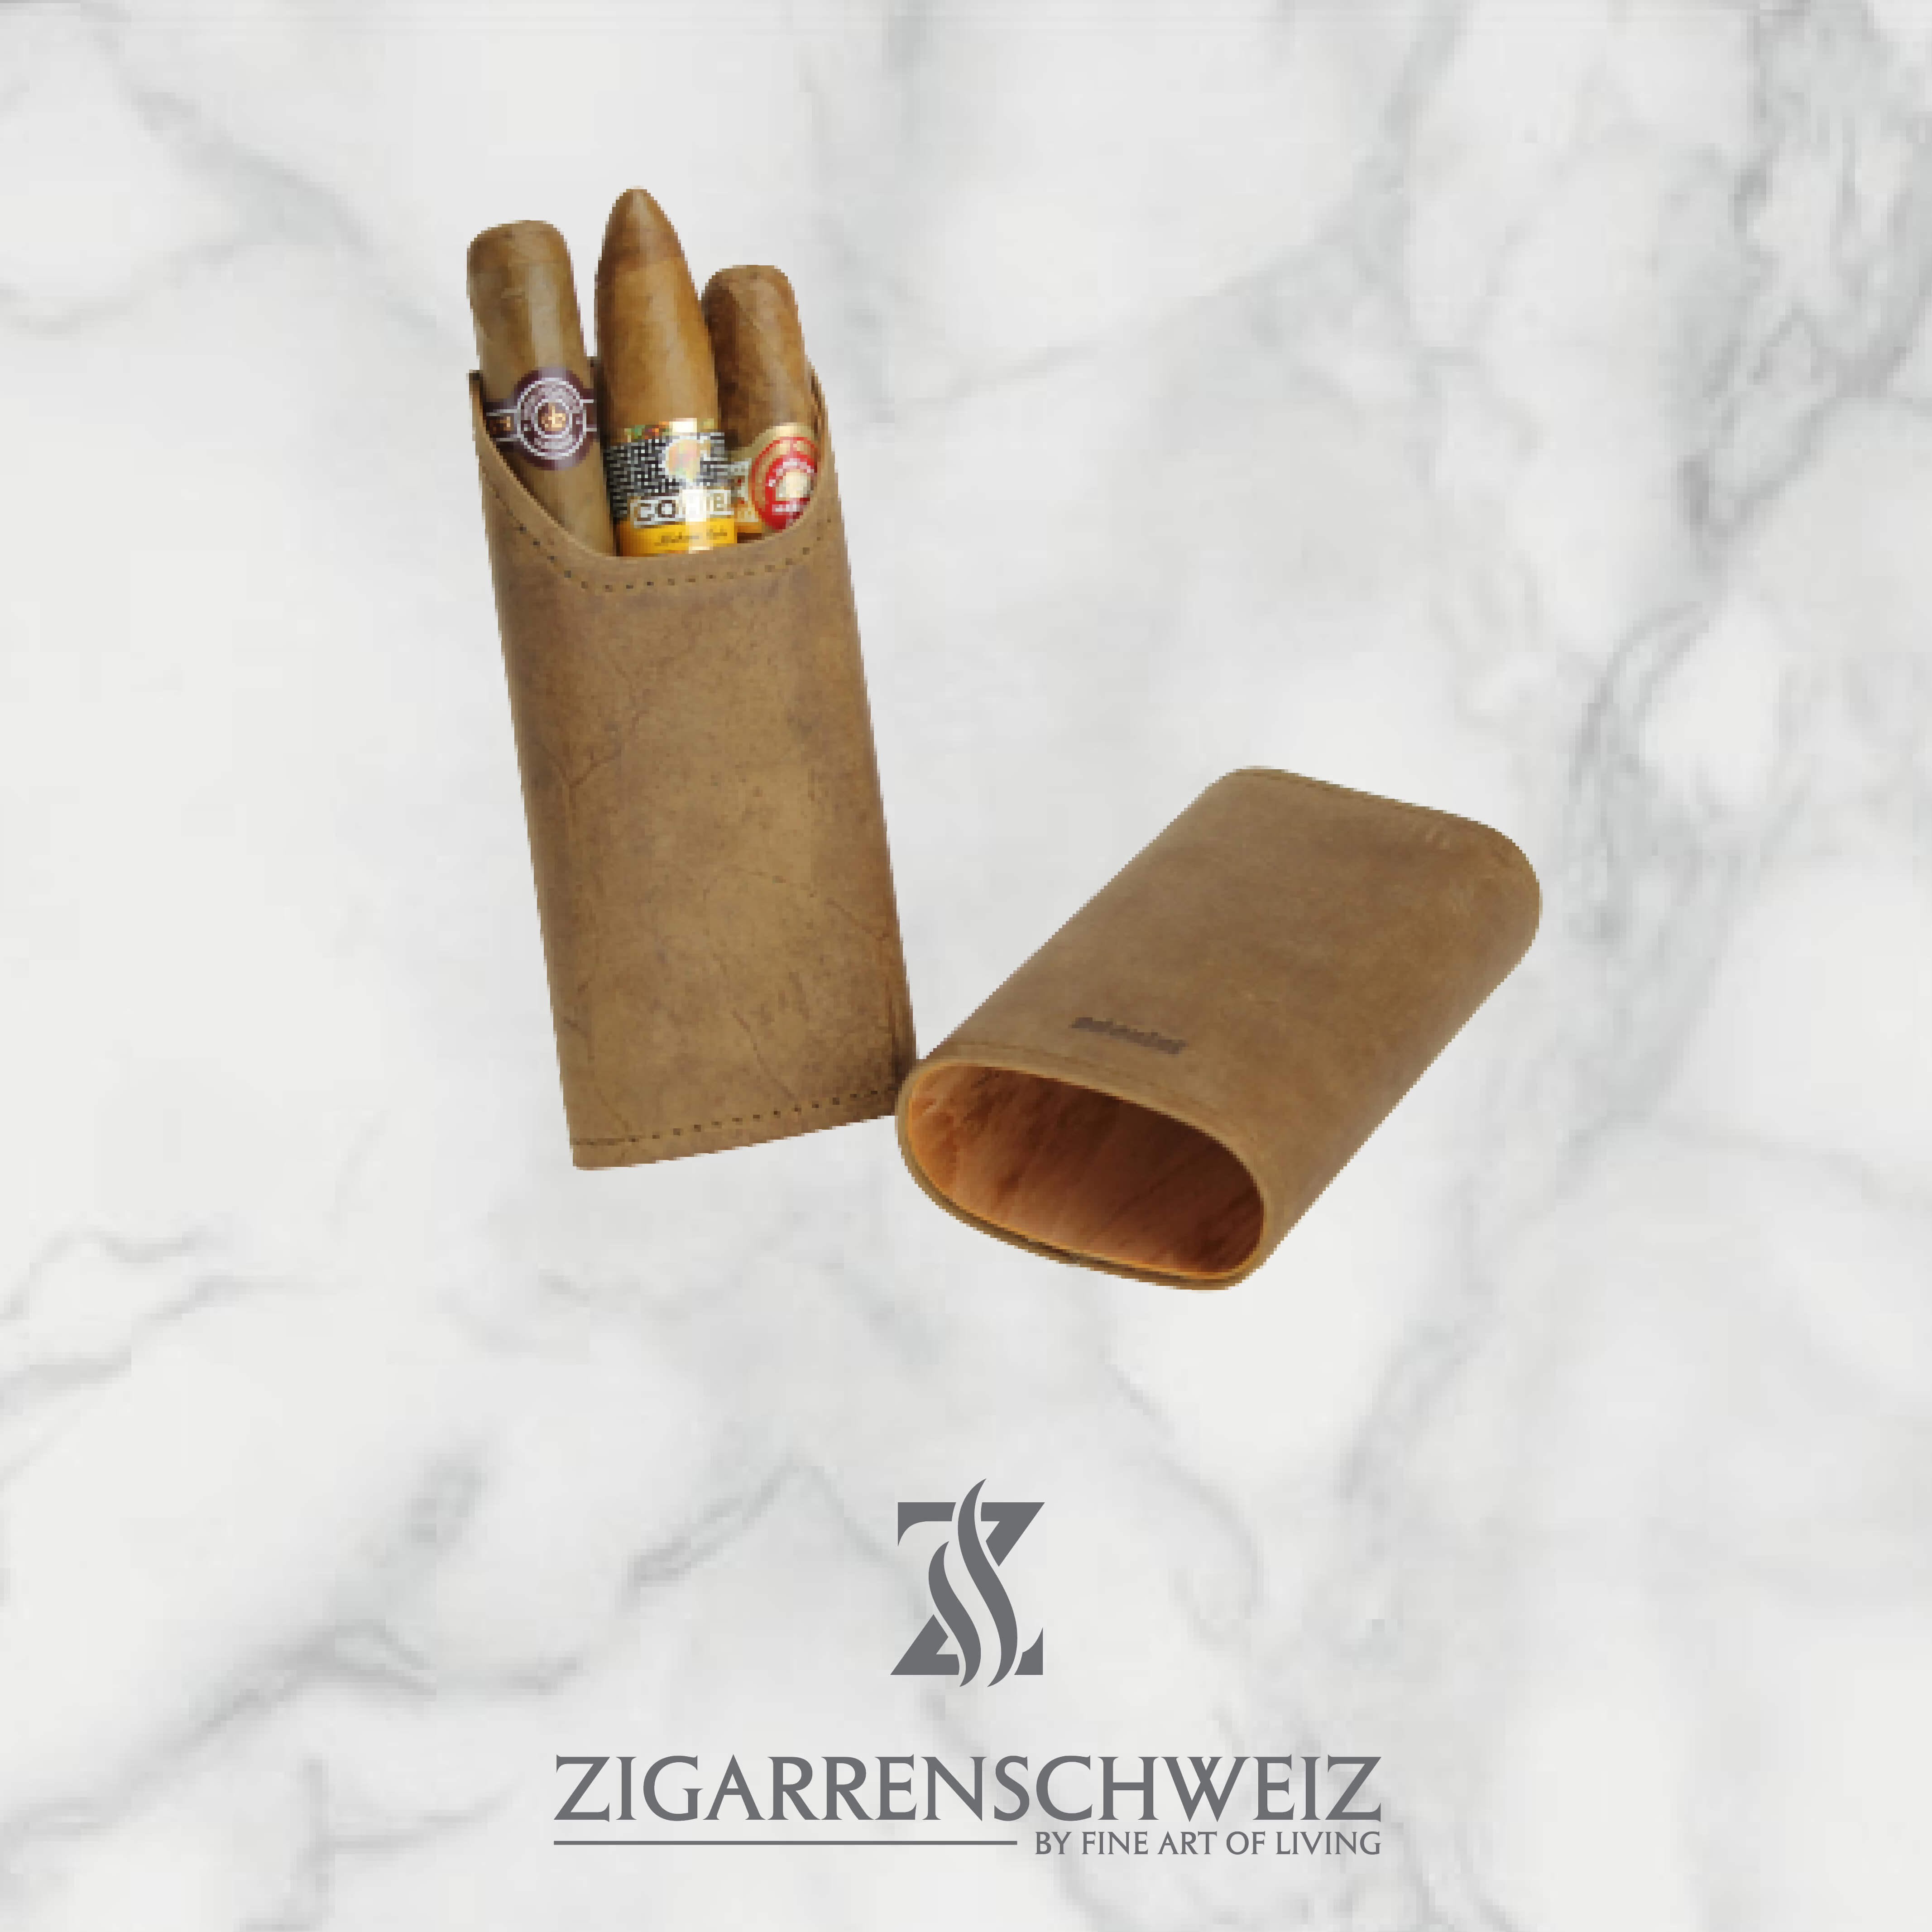 Adorini Zigarrenetui, Material: Echtleder, Kapazität: 2-3 Zigarren, Farbe: Braun, geöffnet